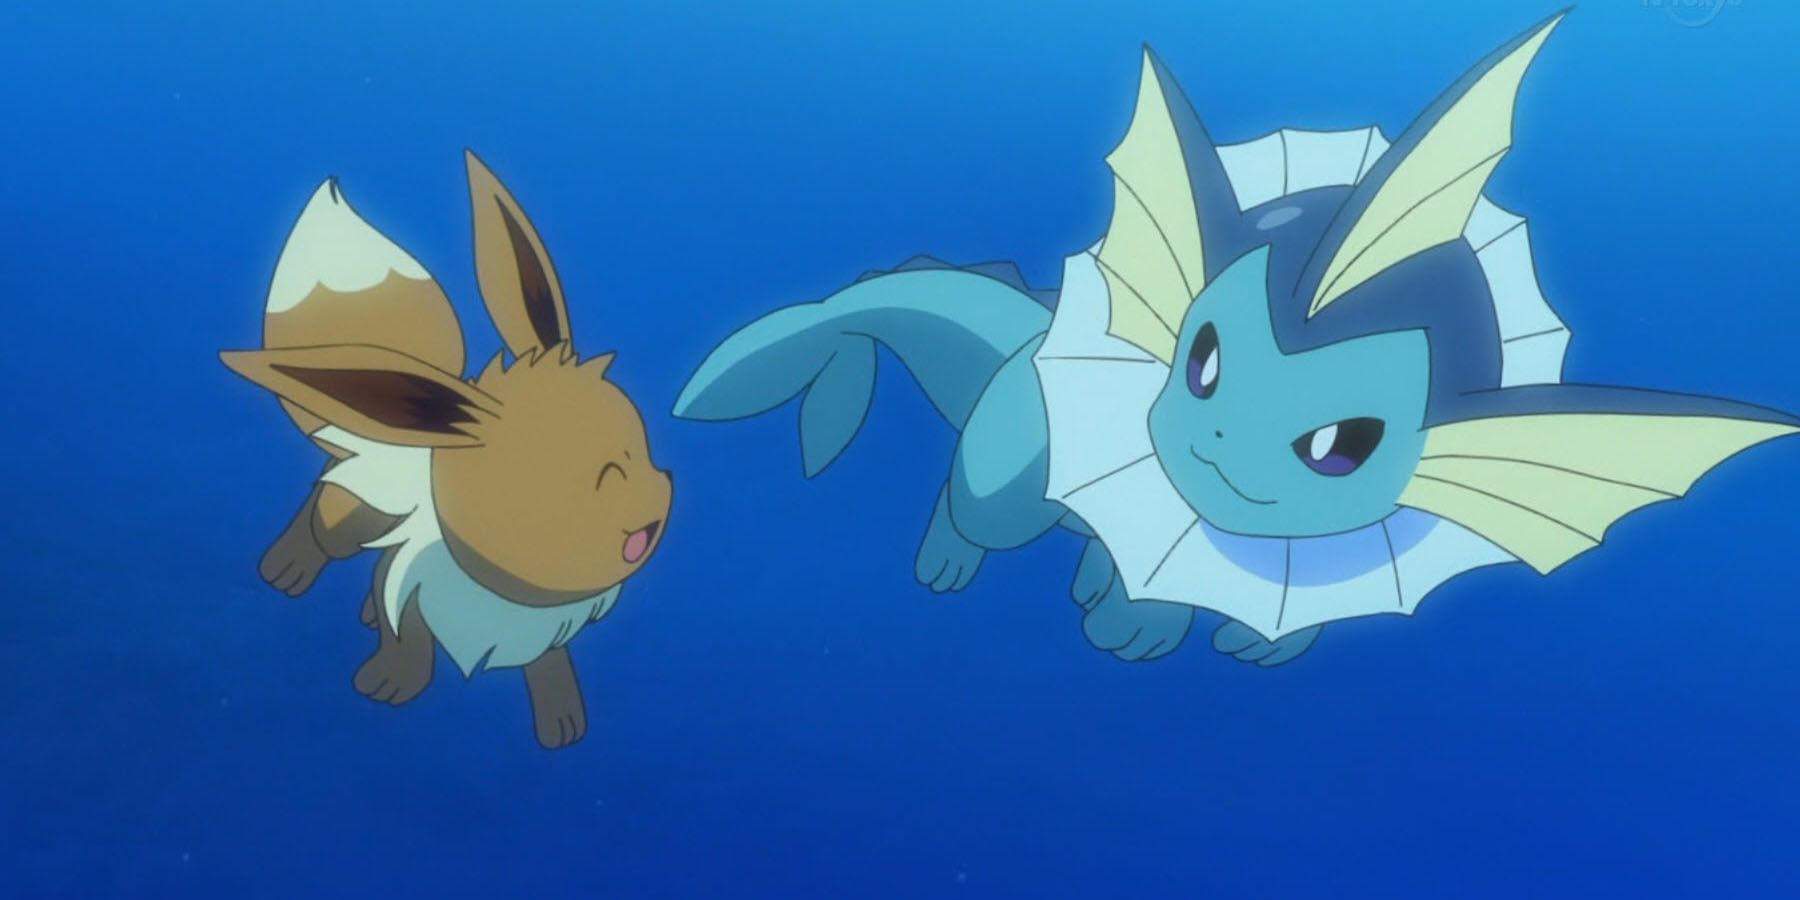 A screenshot of Eevee and Vaporeon swimming underwater in the Pokemon anime.